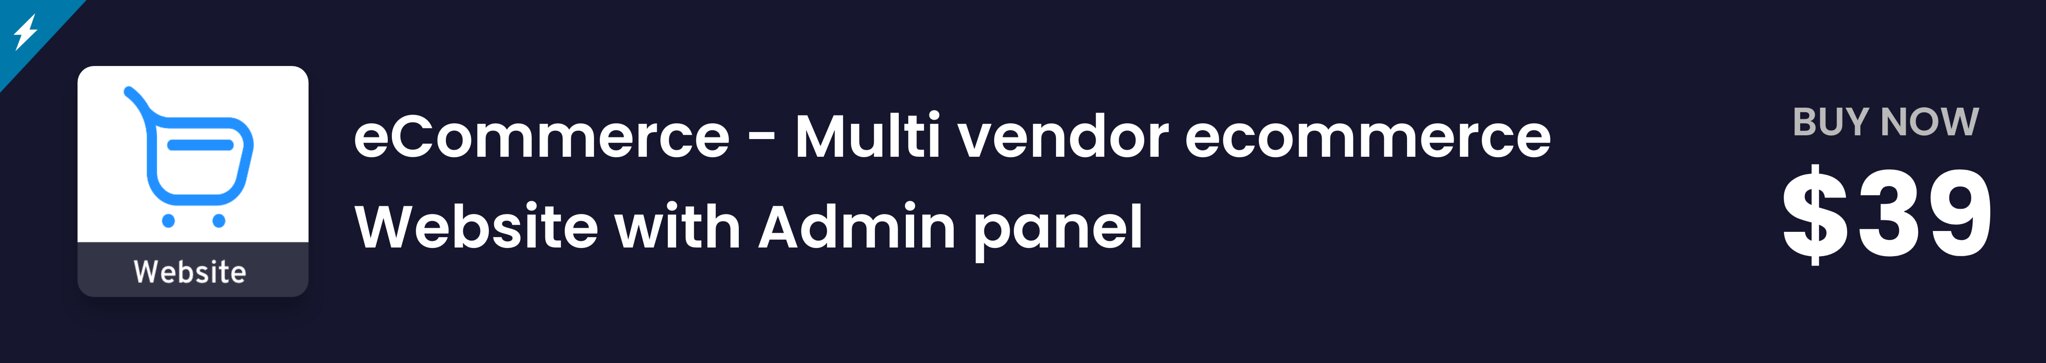 eCommerce - Multi vendor ecommerce iOS App with Admin panel - 2